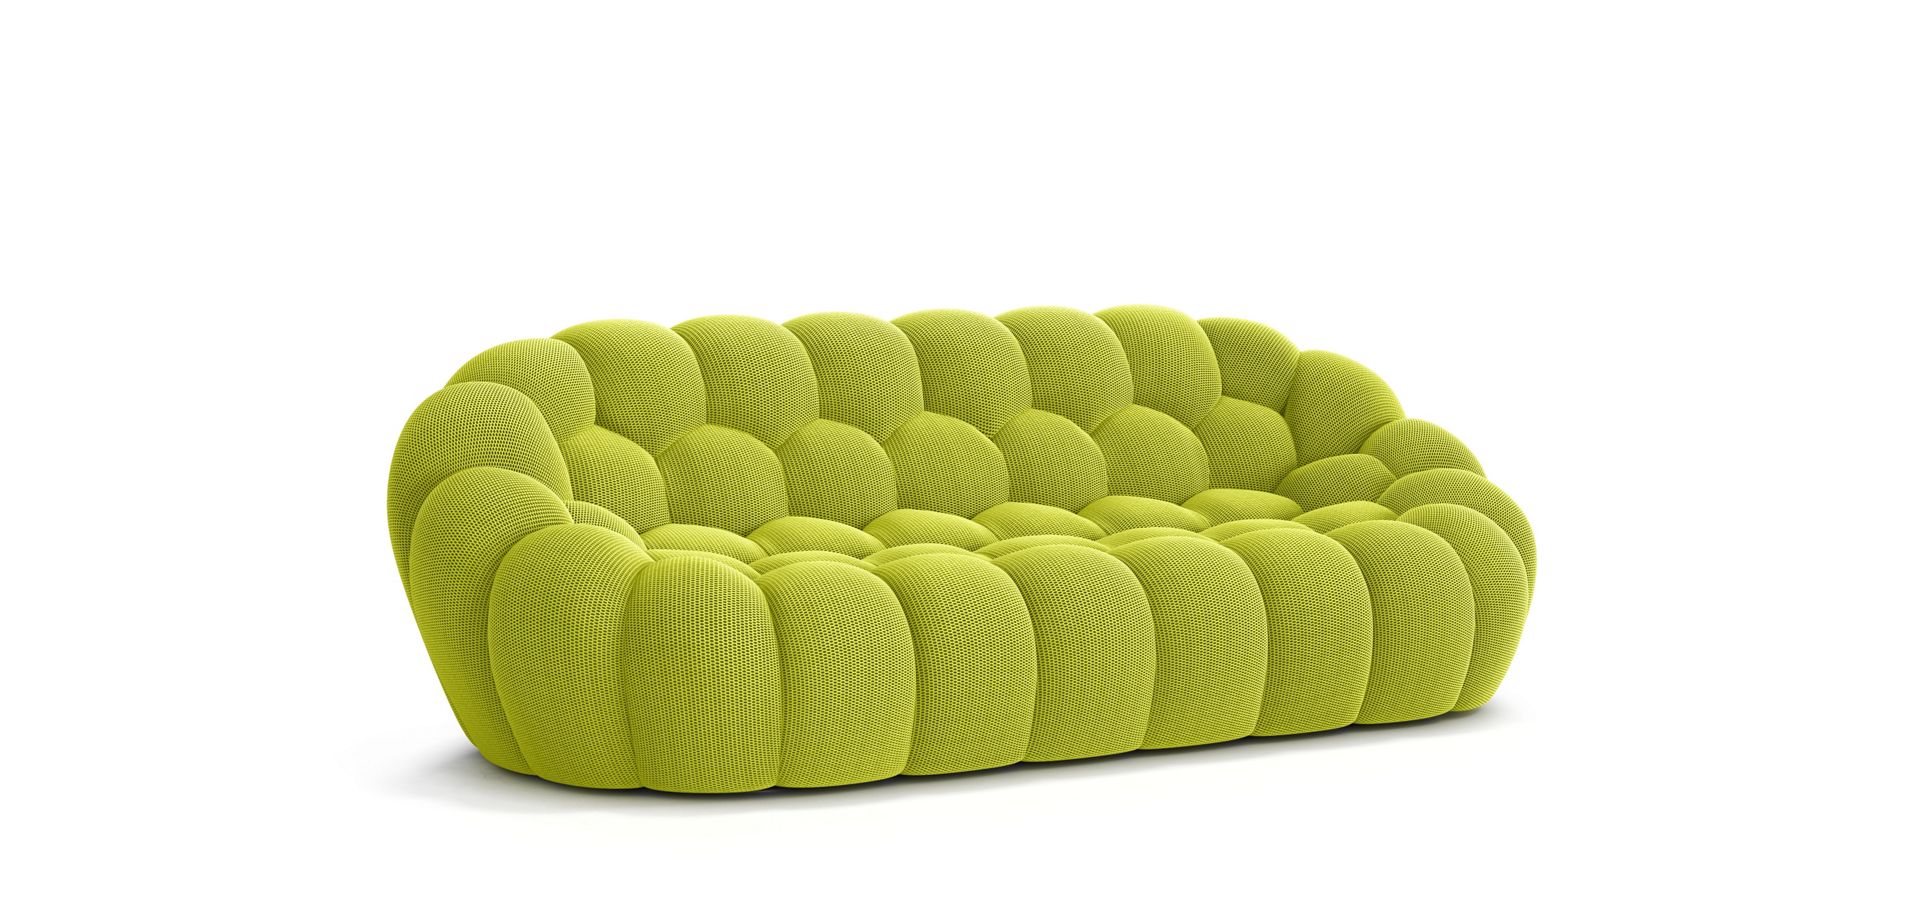 gran sofá 3 plazas - techno 3D image number 1